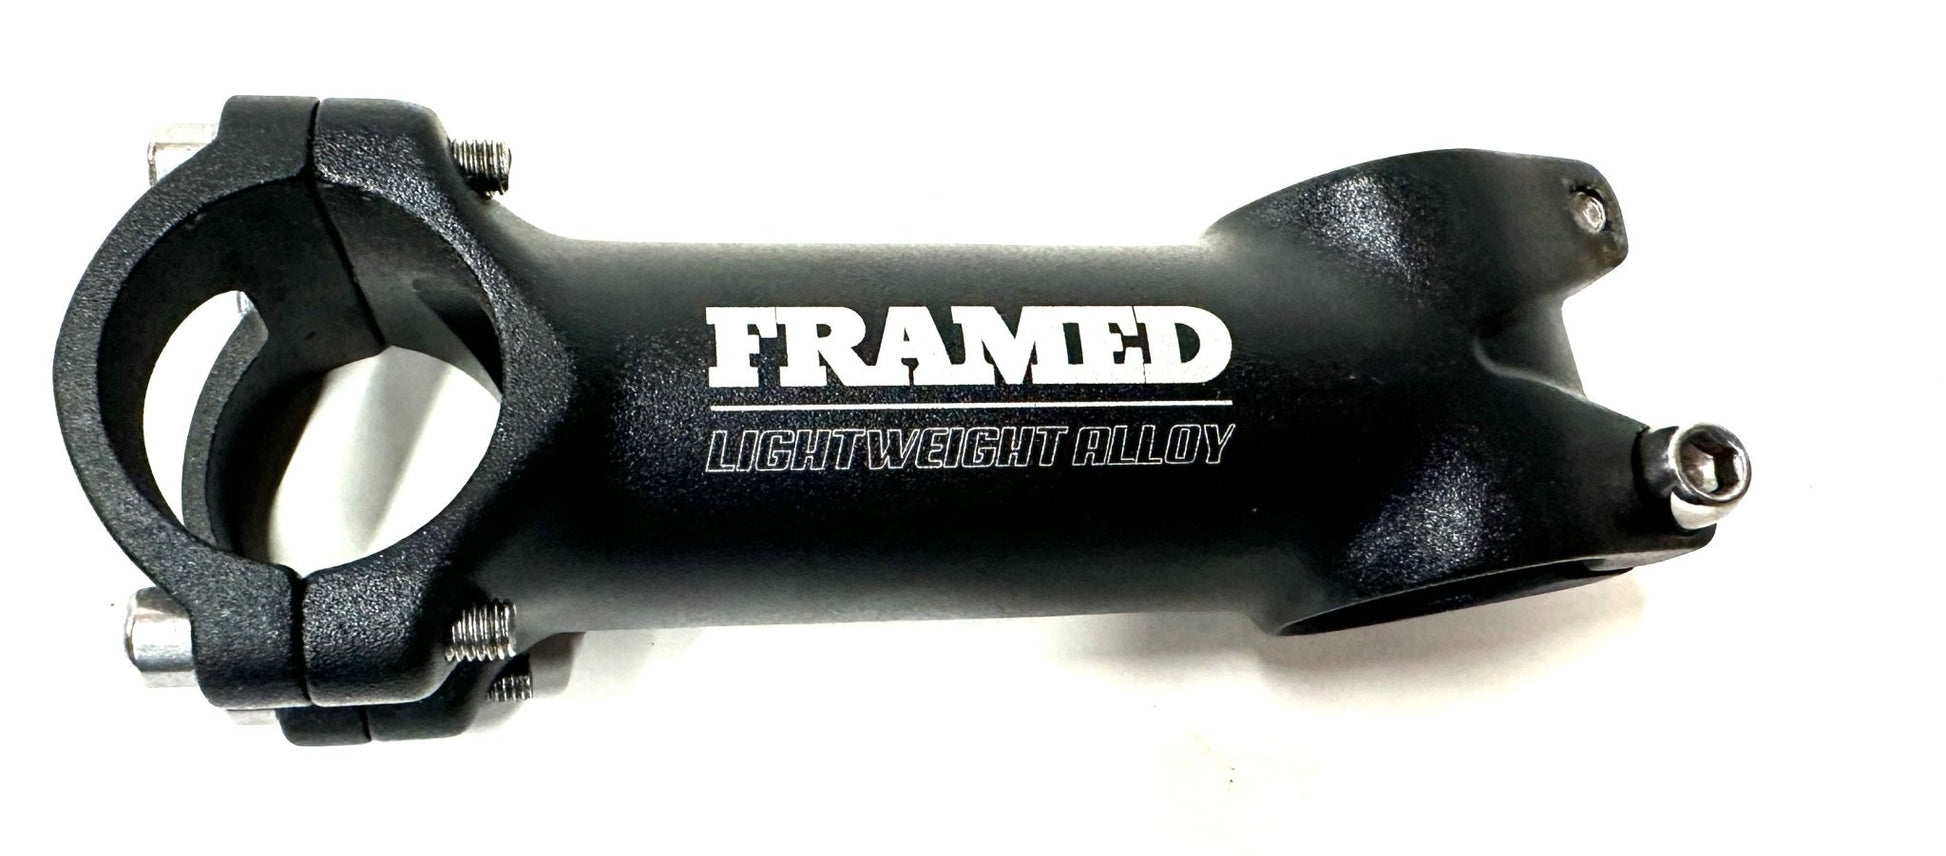 Framed Alloy 1-1/8" x 100mm x 31.8mm 6 degrees Threadless Bike Stem Black New - Random Bike Parts